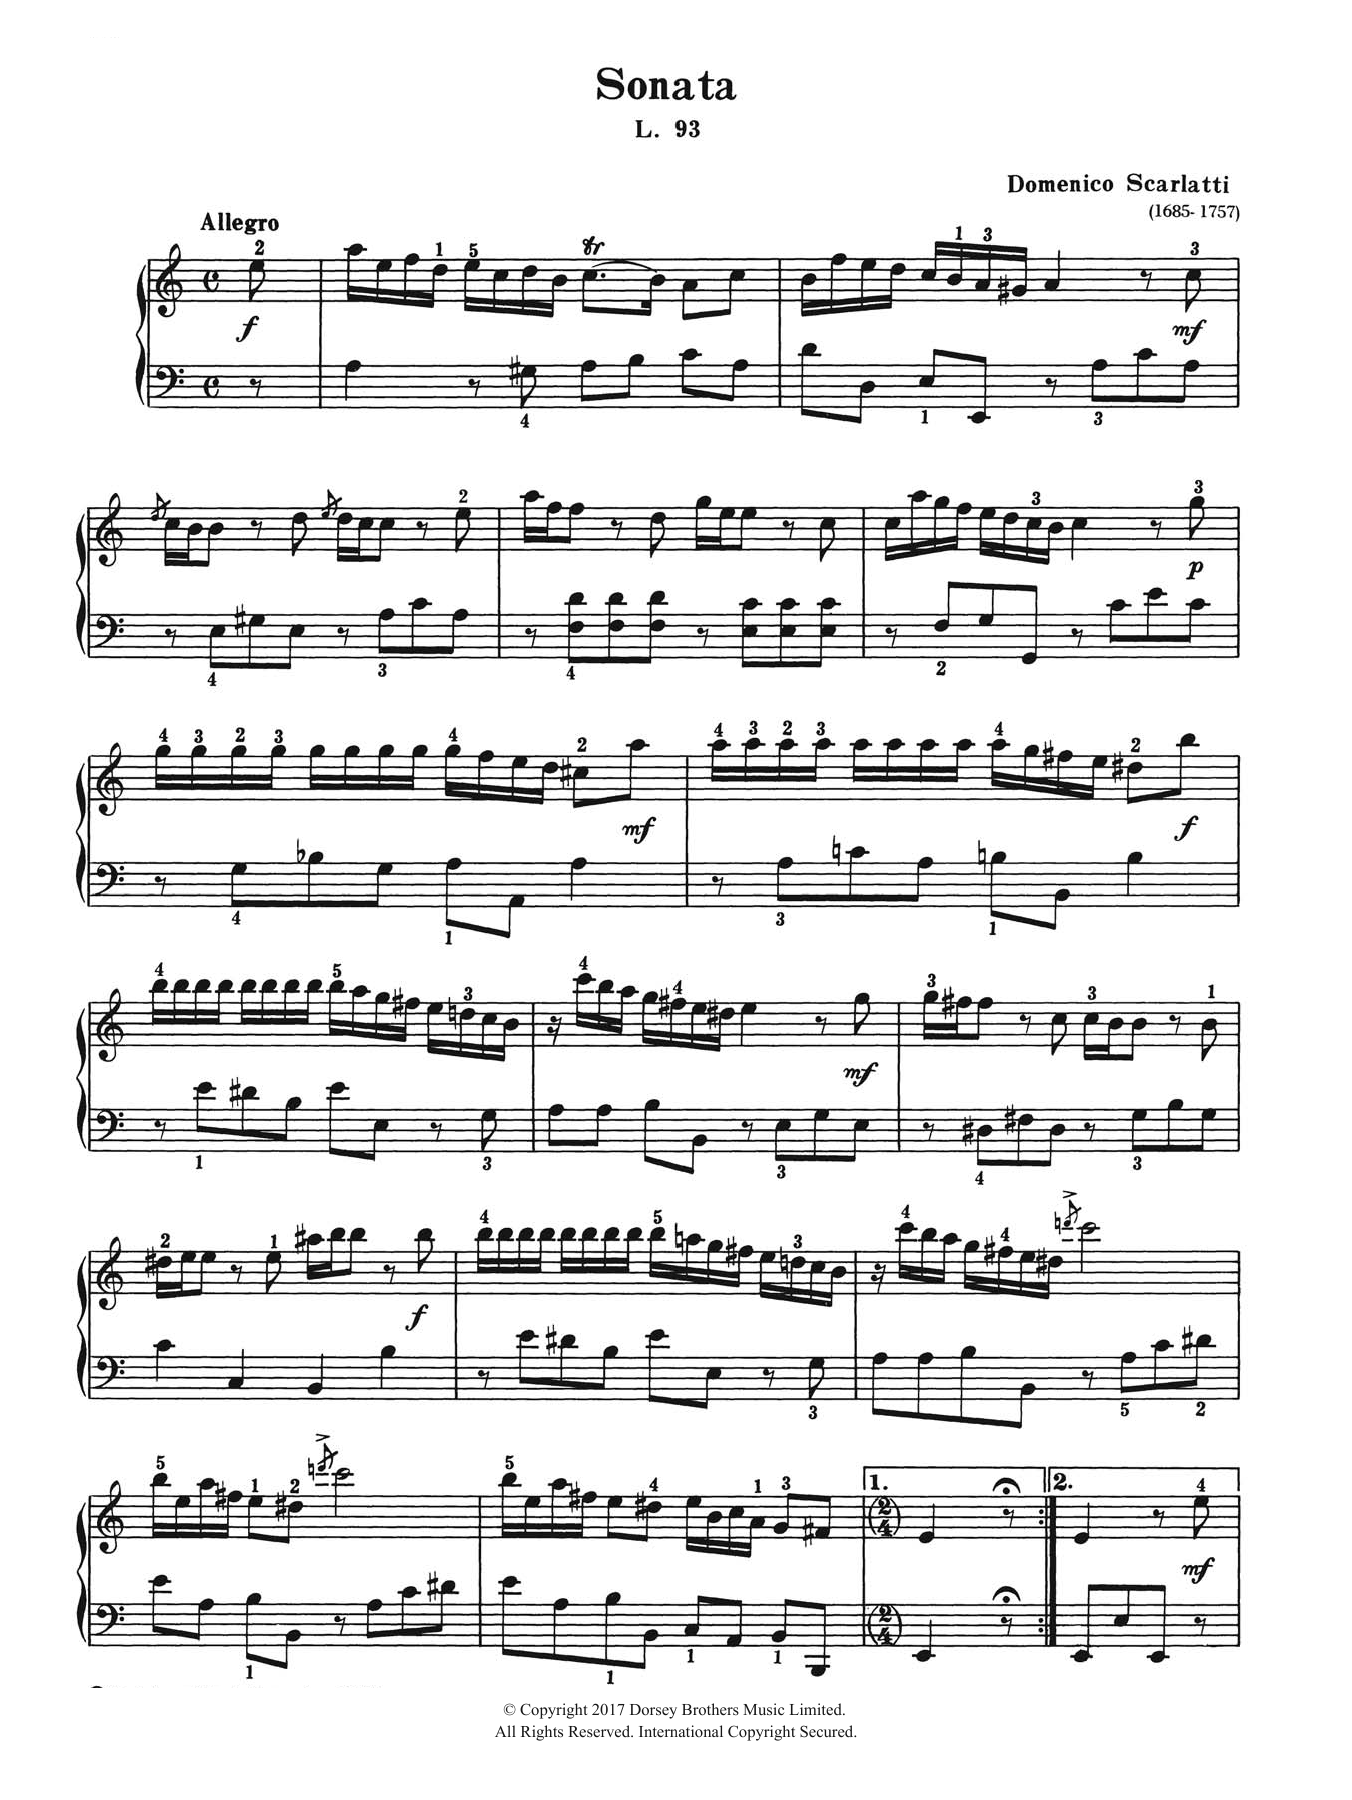 Download Domenico Scarlatti Sonata In A Minor L. 93 Sheet Music and learn how to play Piano PDF digital score in minutes